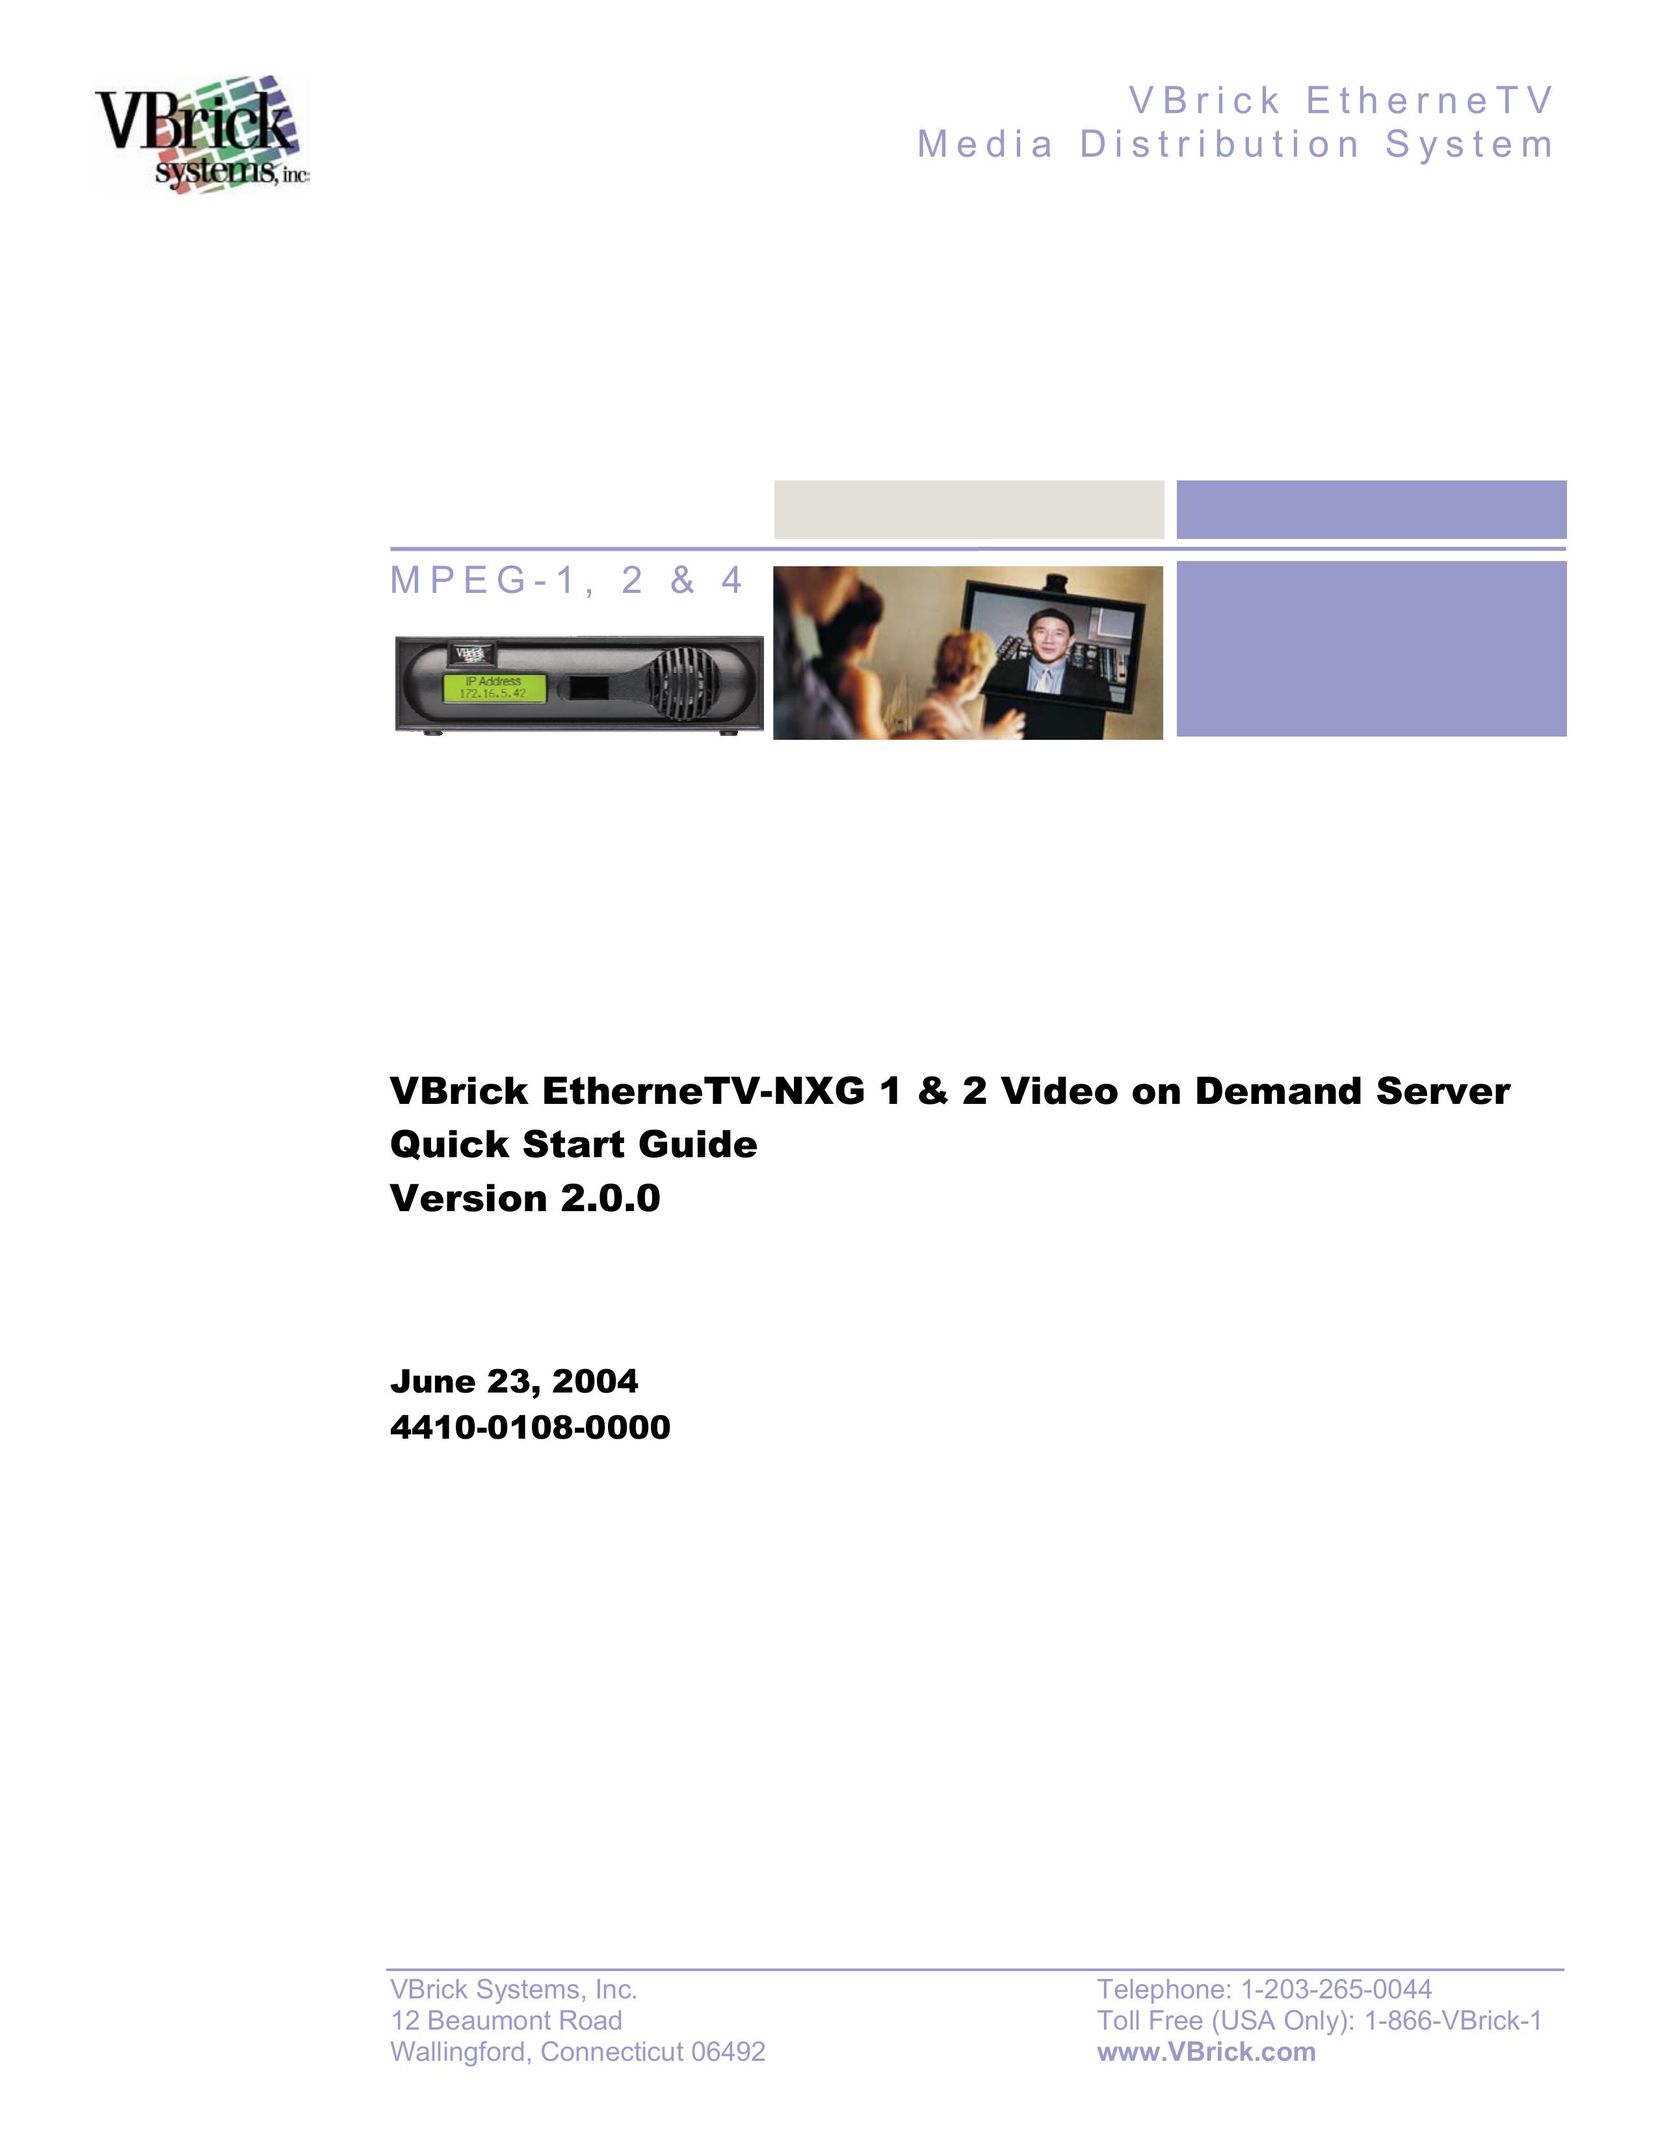 VBrick Systems EtherneTV-NXG 2 Home Theater Server User Manual